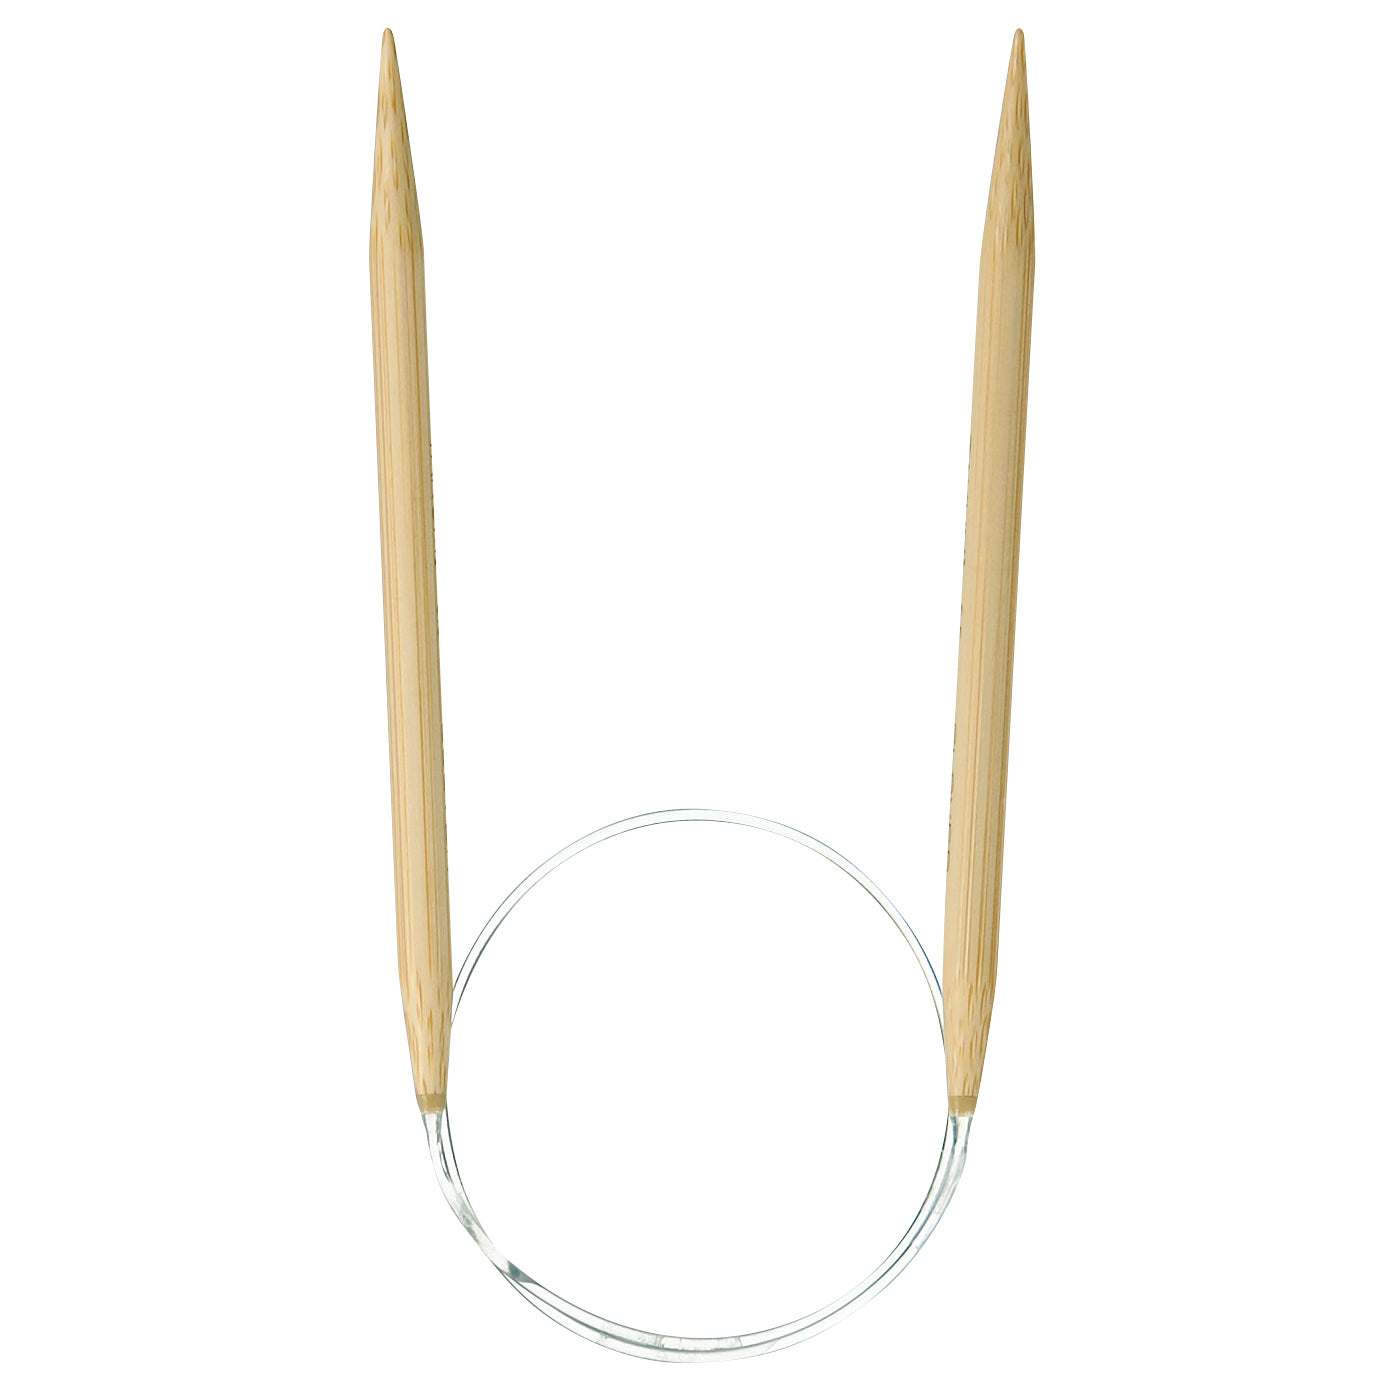 Clover Fixed Circular Knitting Needles - Takumi Bamboo - 40cm